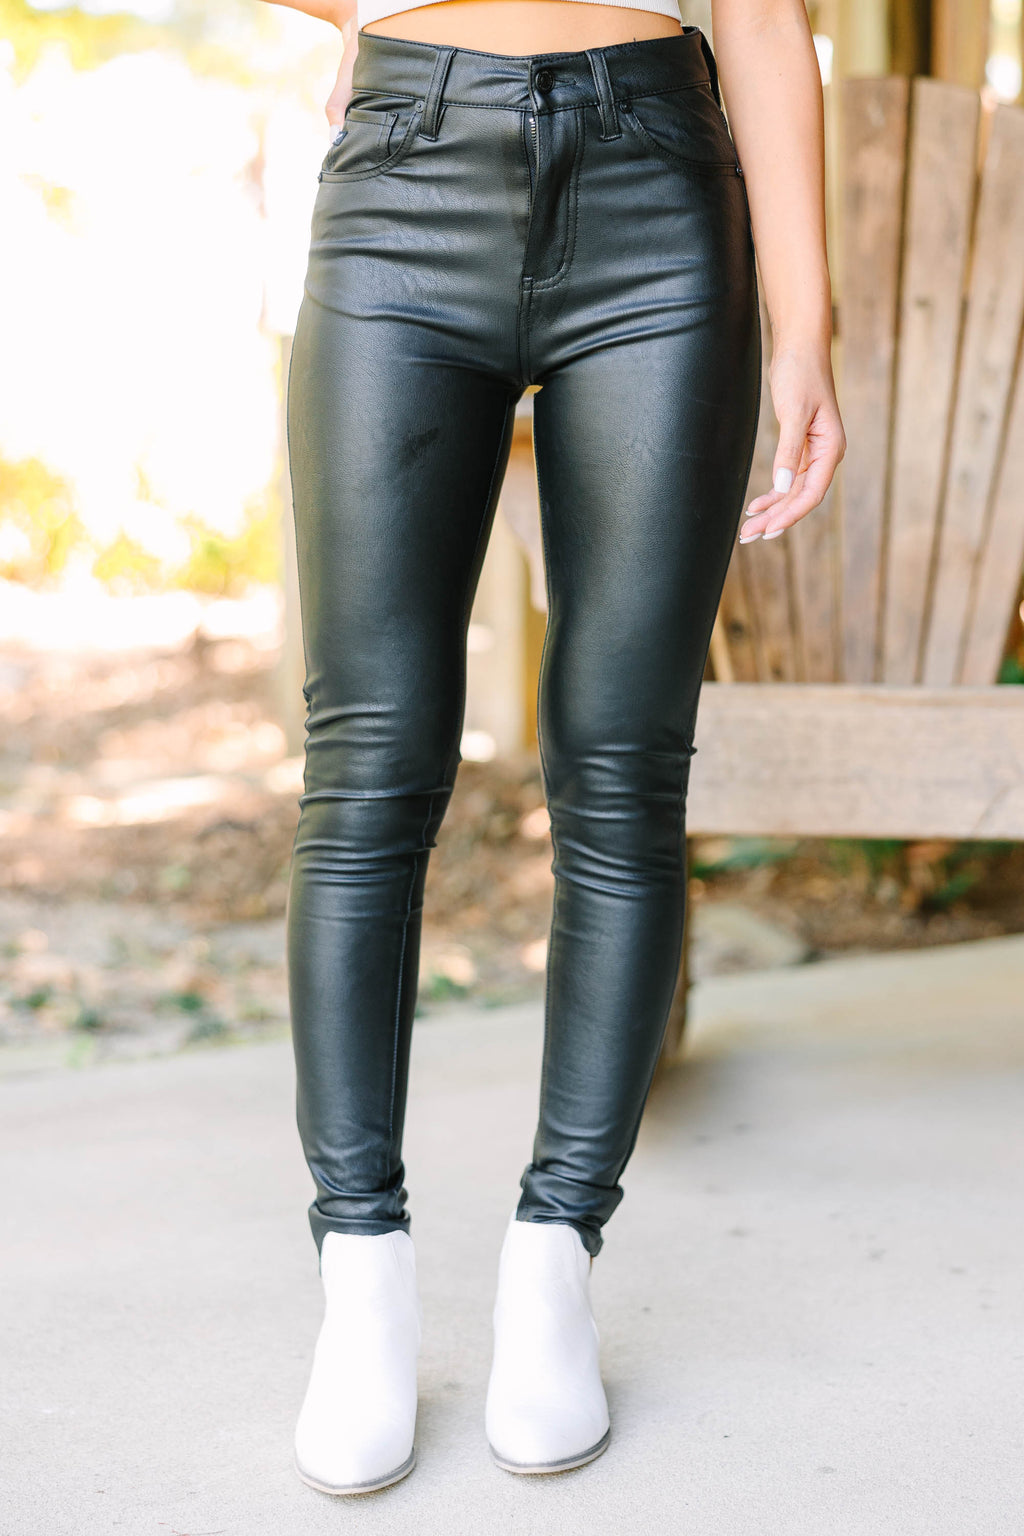 Winter Plus Size Leather Leggings Women Pants High Waist Warm Thick Velvet  Large | eBay